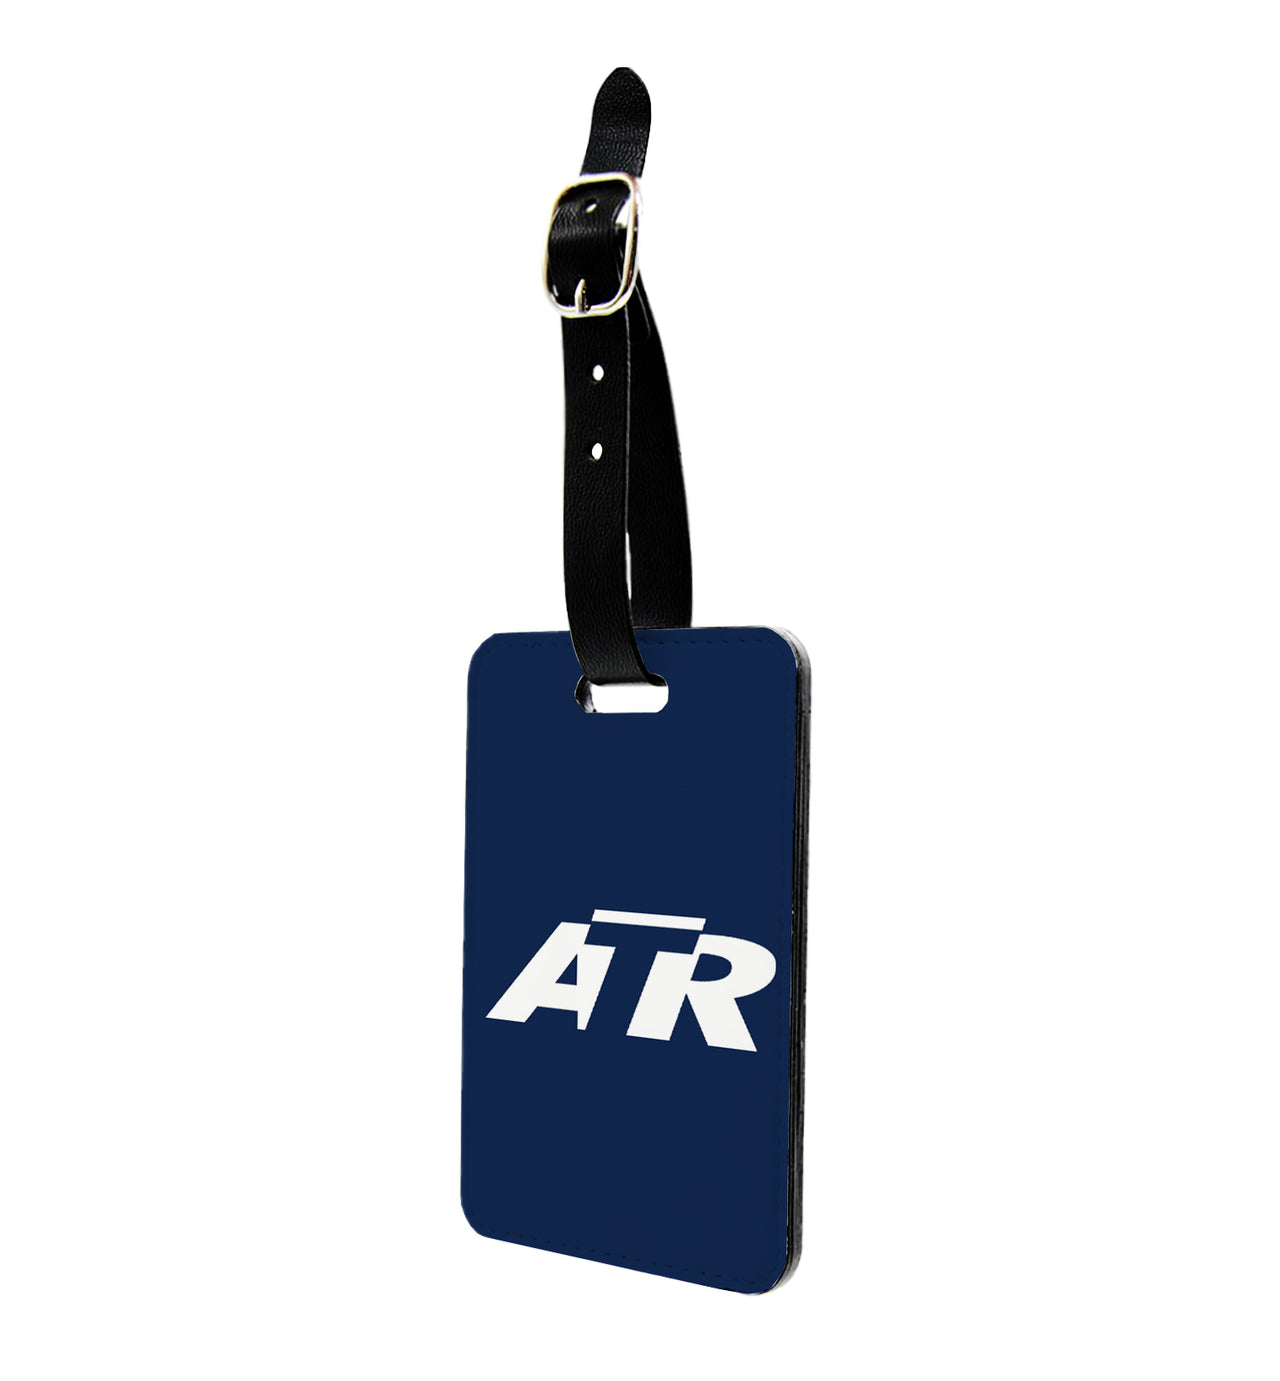 ATR & Text Designed Luggage Tag